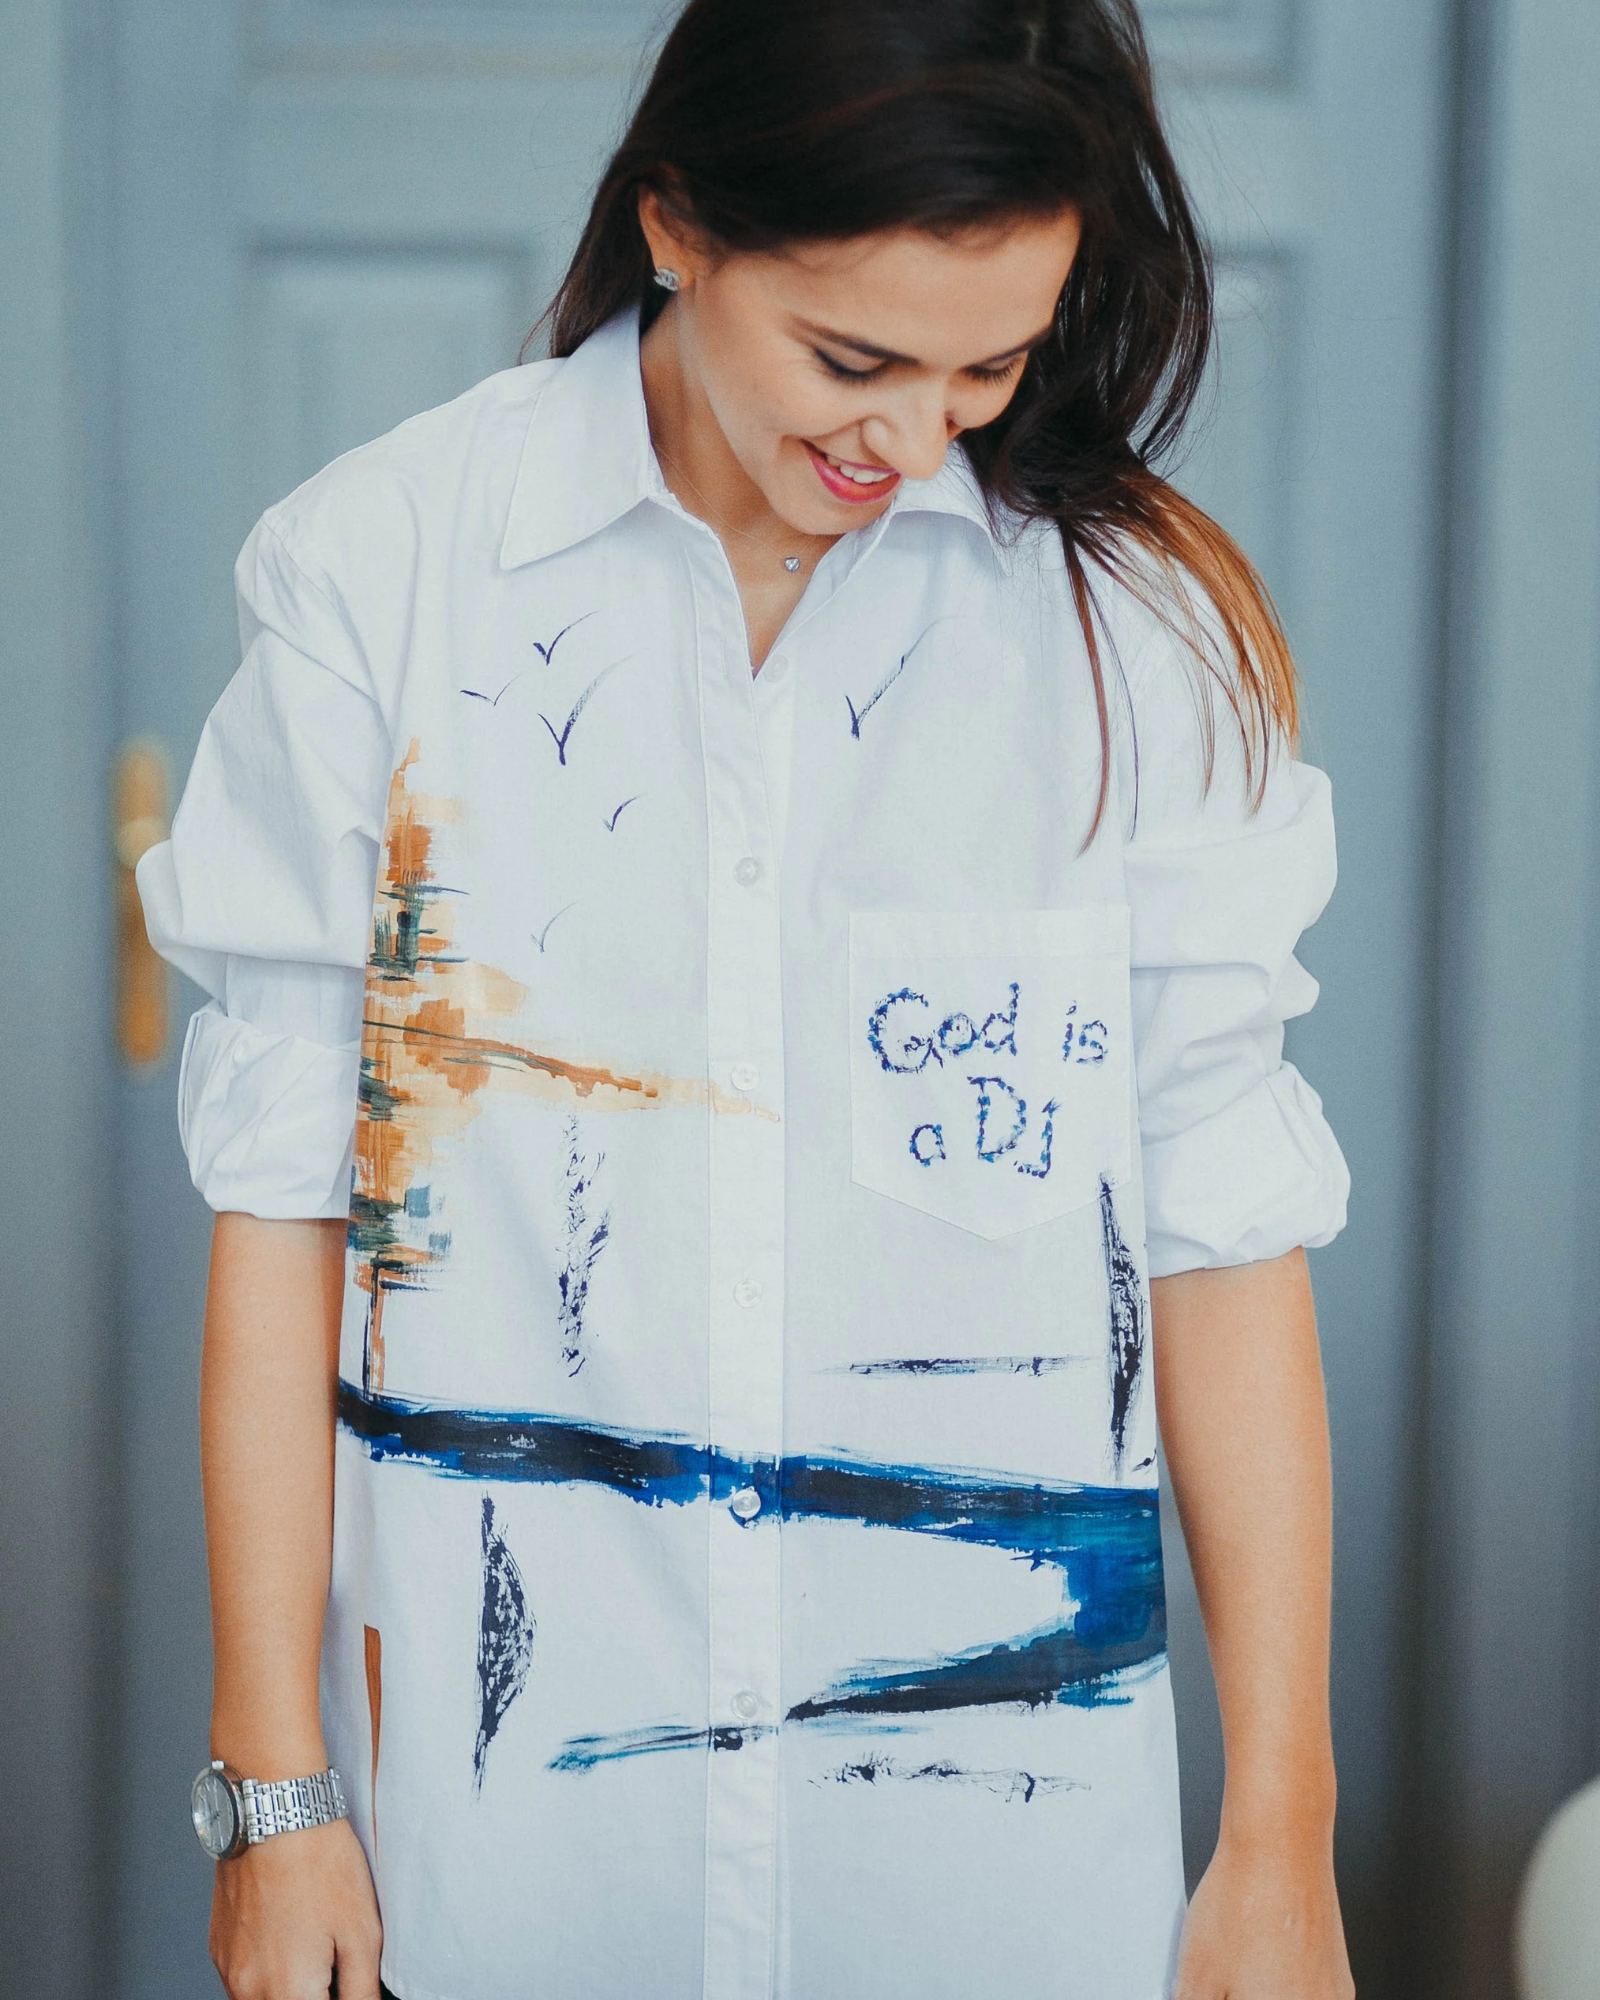 "God is a DJ" hand painted shirt